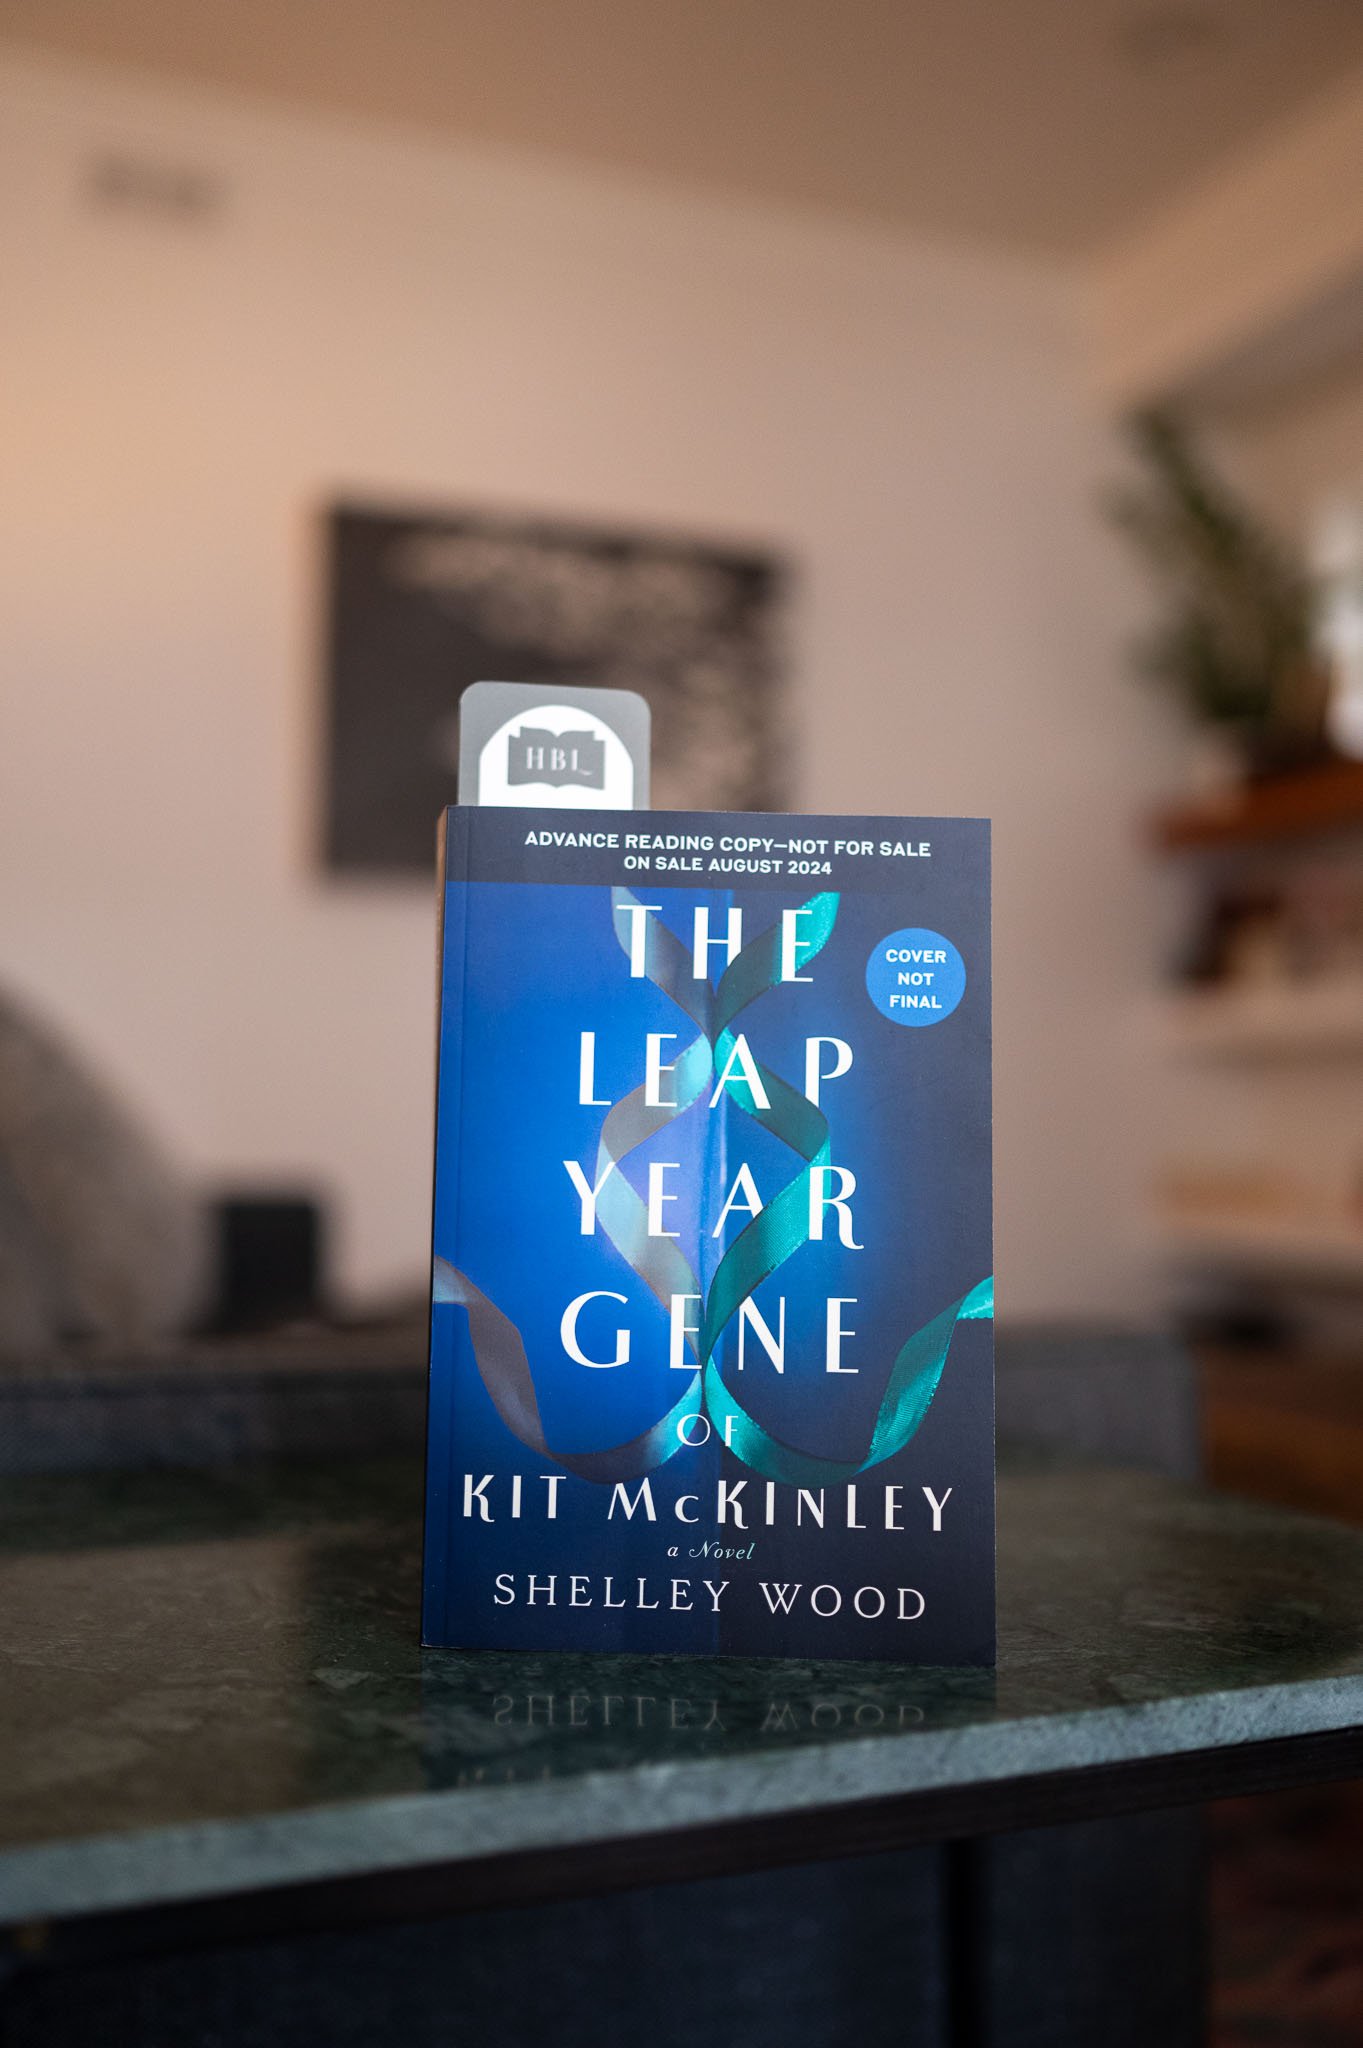 The Leap Year Gene of Kit McKinley by Shelley Wood.jpg